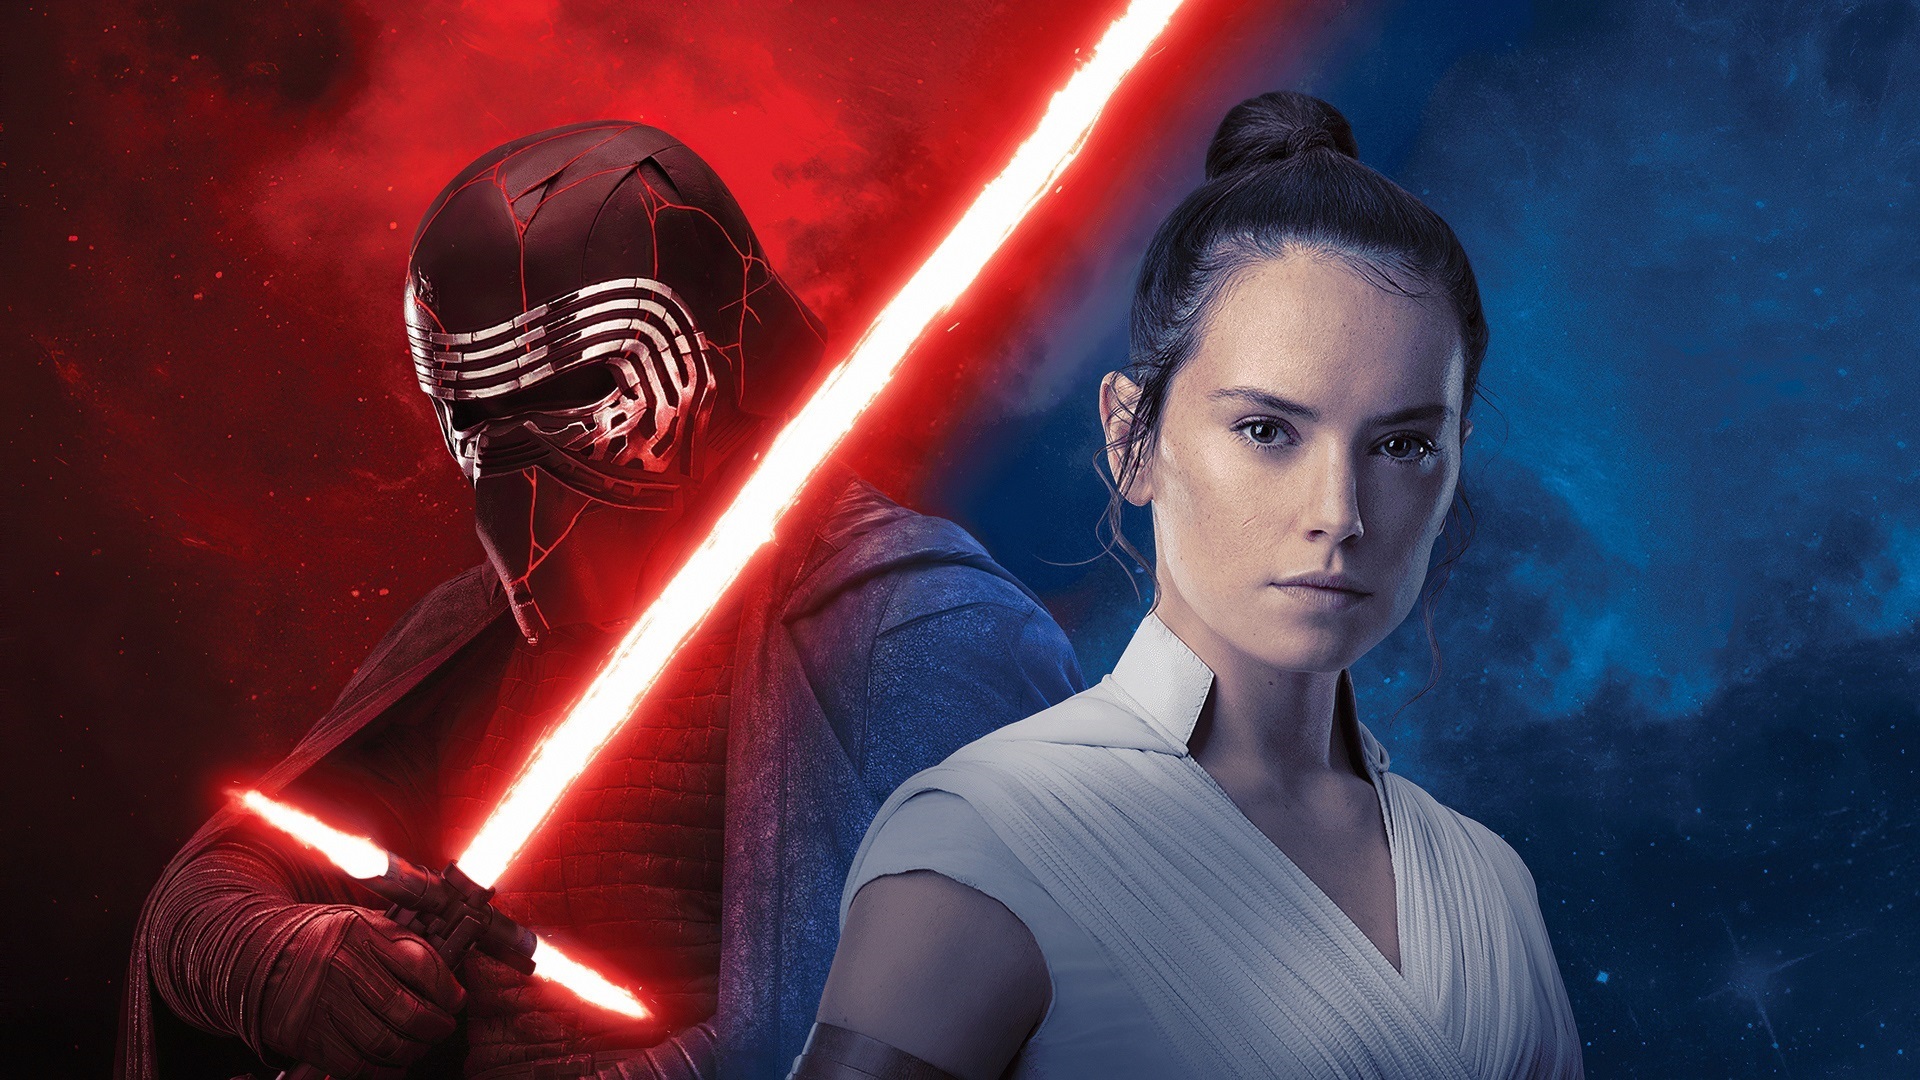 Star Wars - A Ascensão Skywalker - Tempos Literários